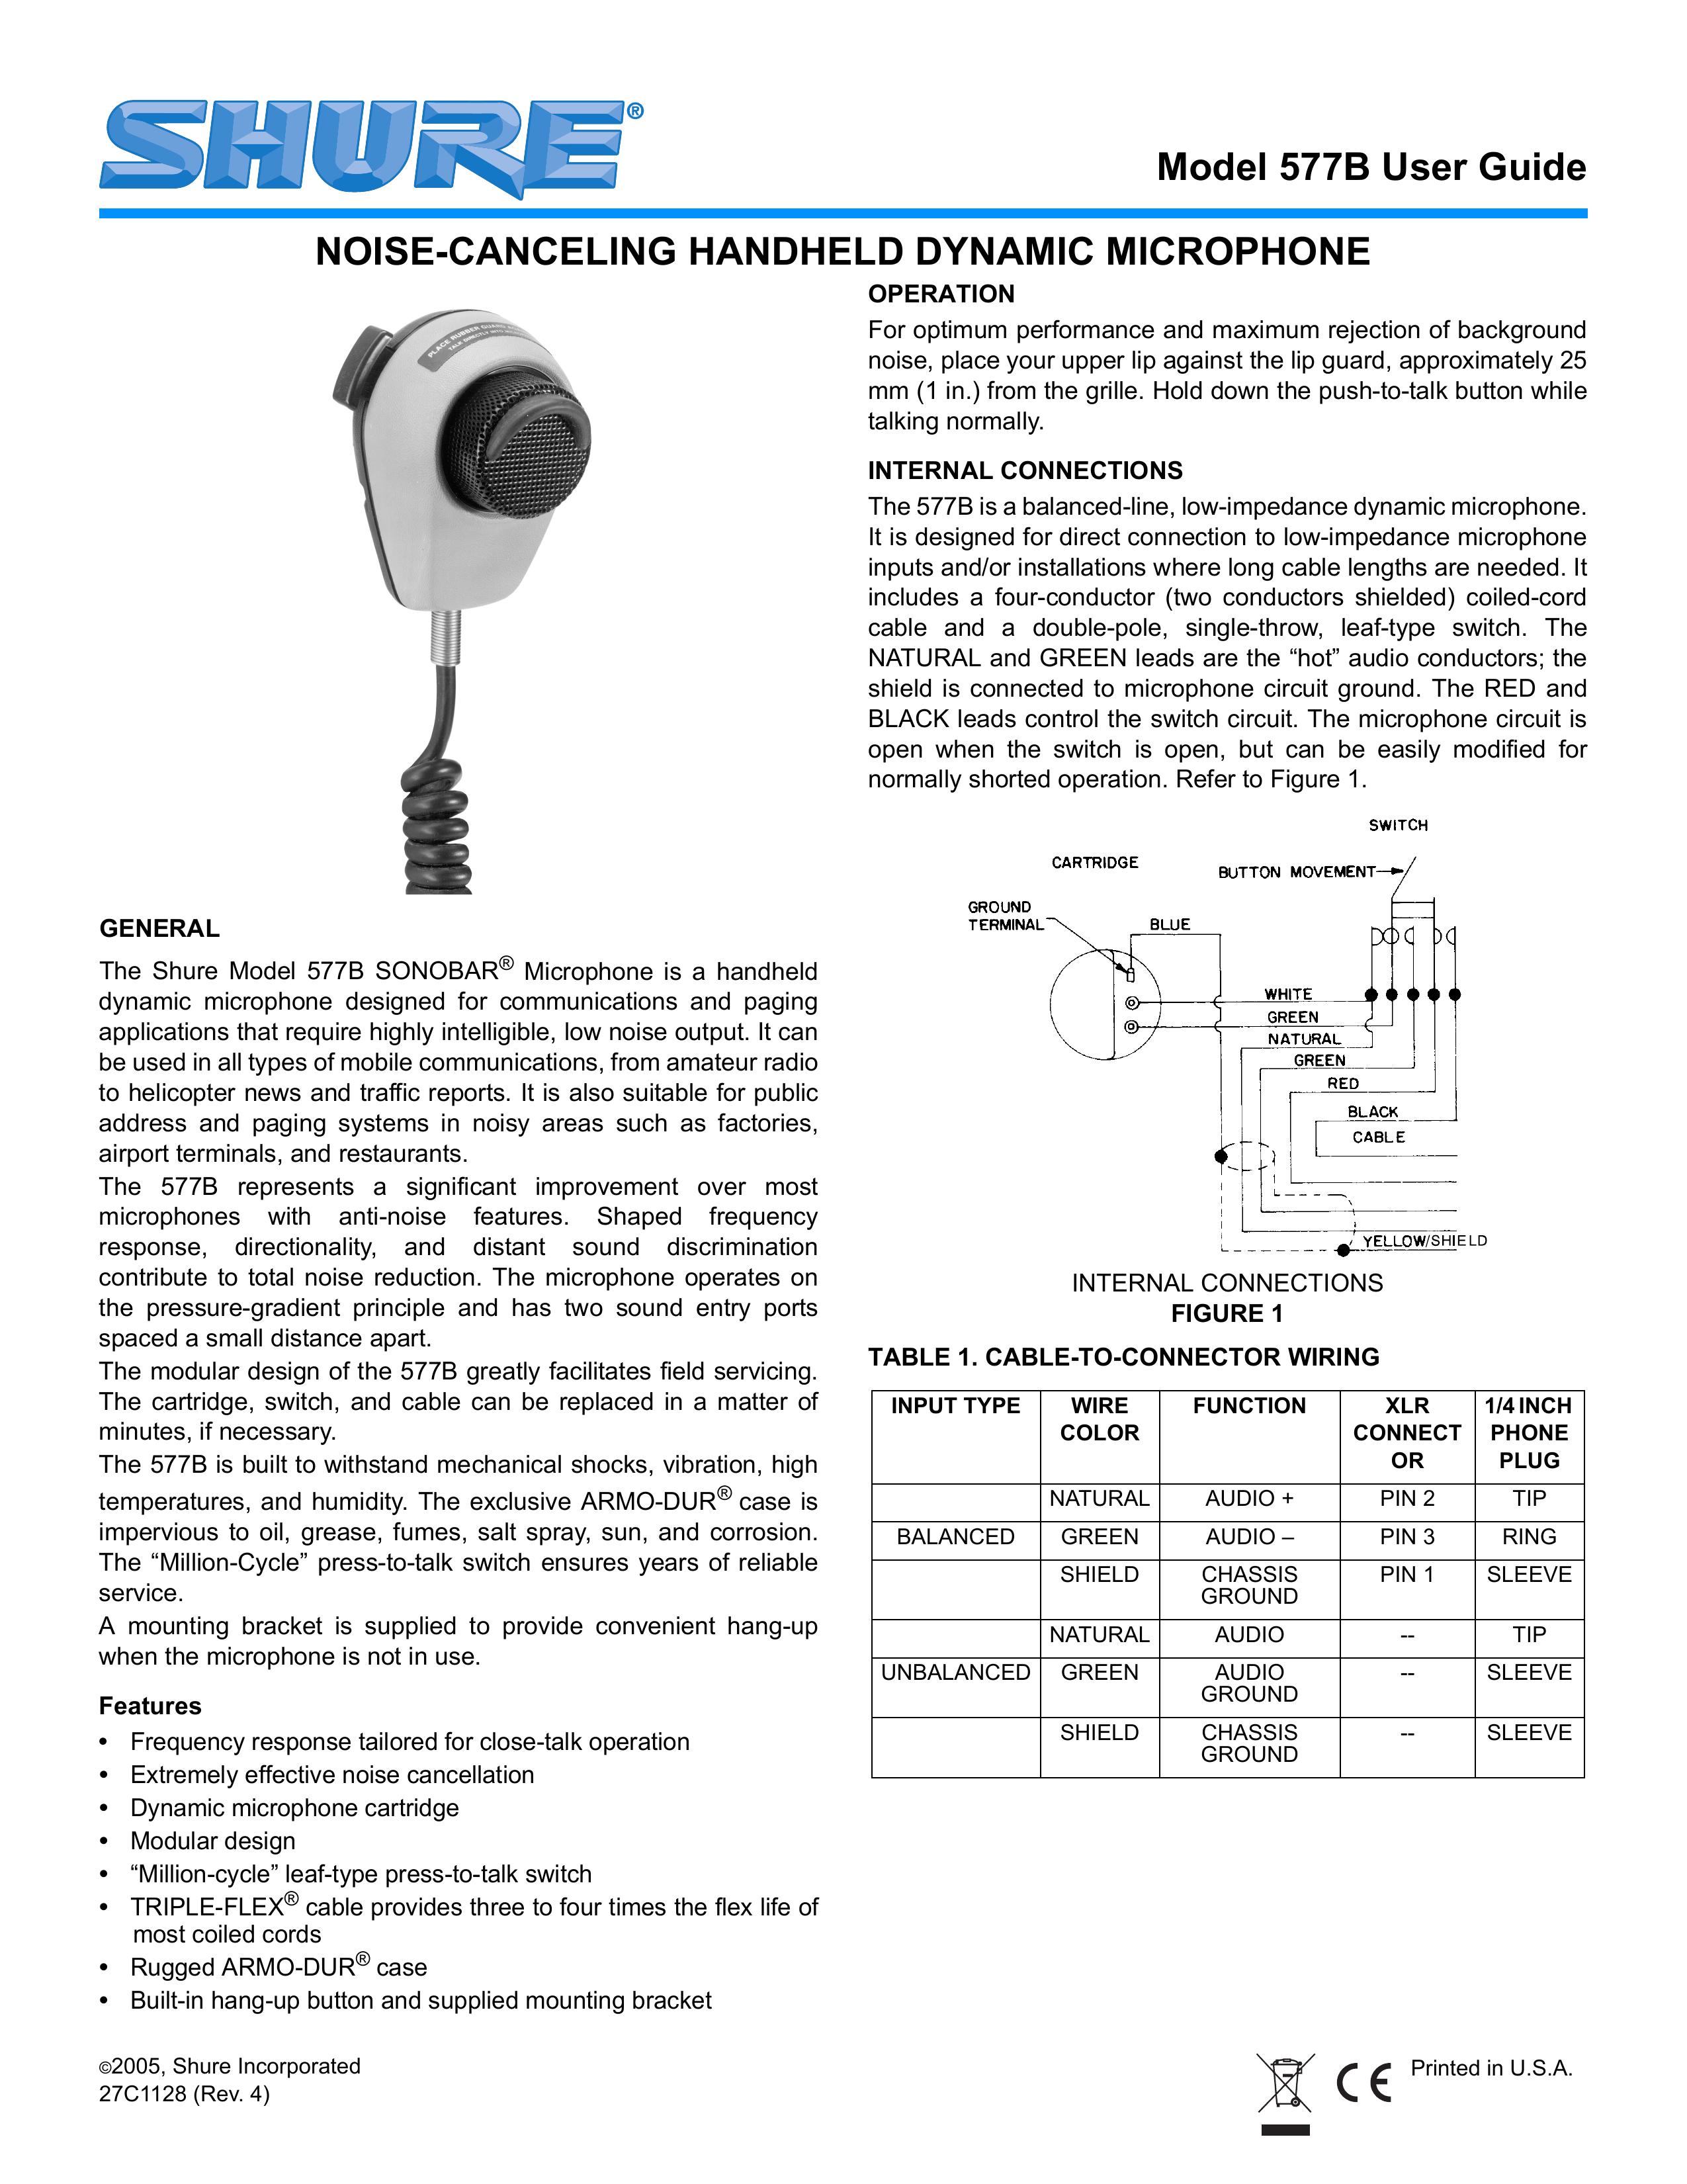 Shure 577B Microphone User Manual